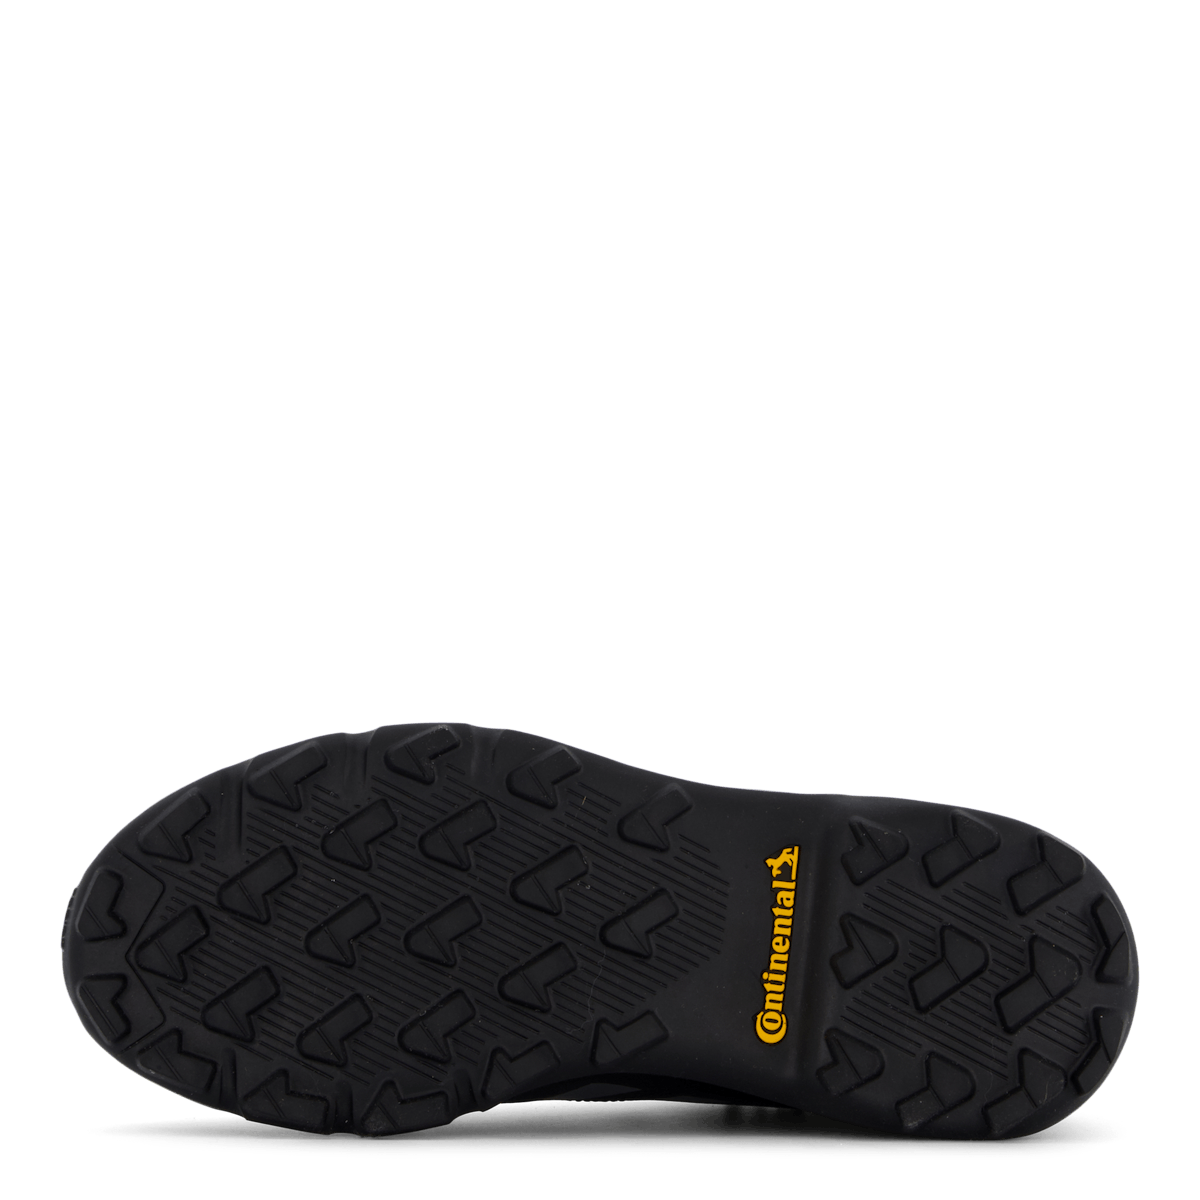 Terrex Mid GORE-TEX Hiking Shoes Core Black / Grey Three / Core Black